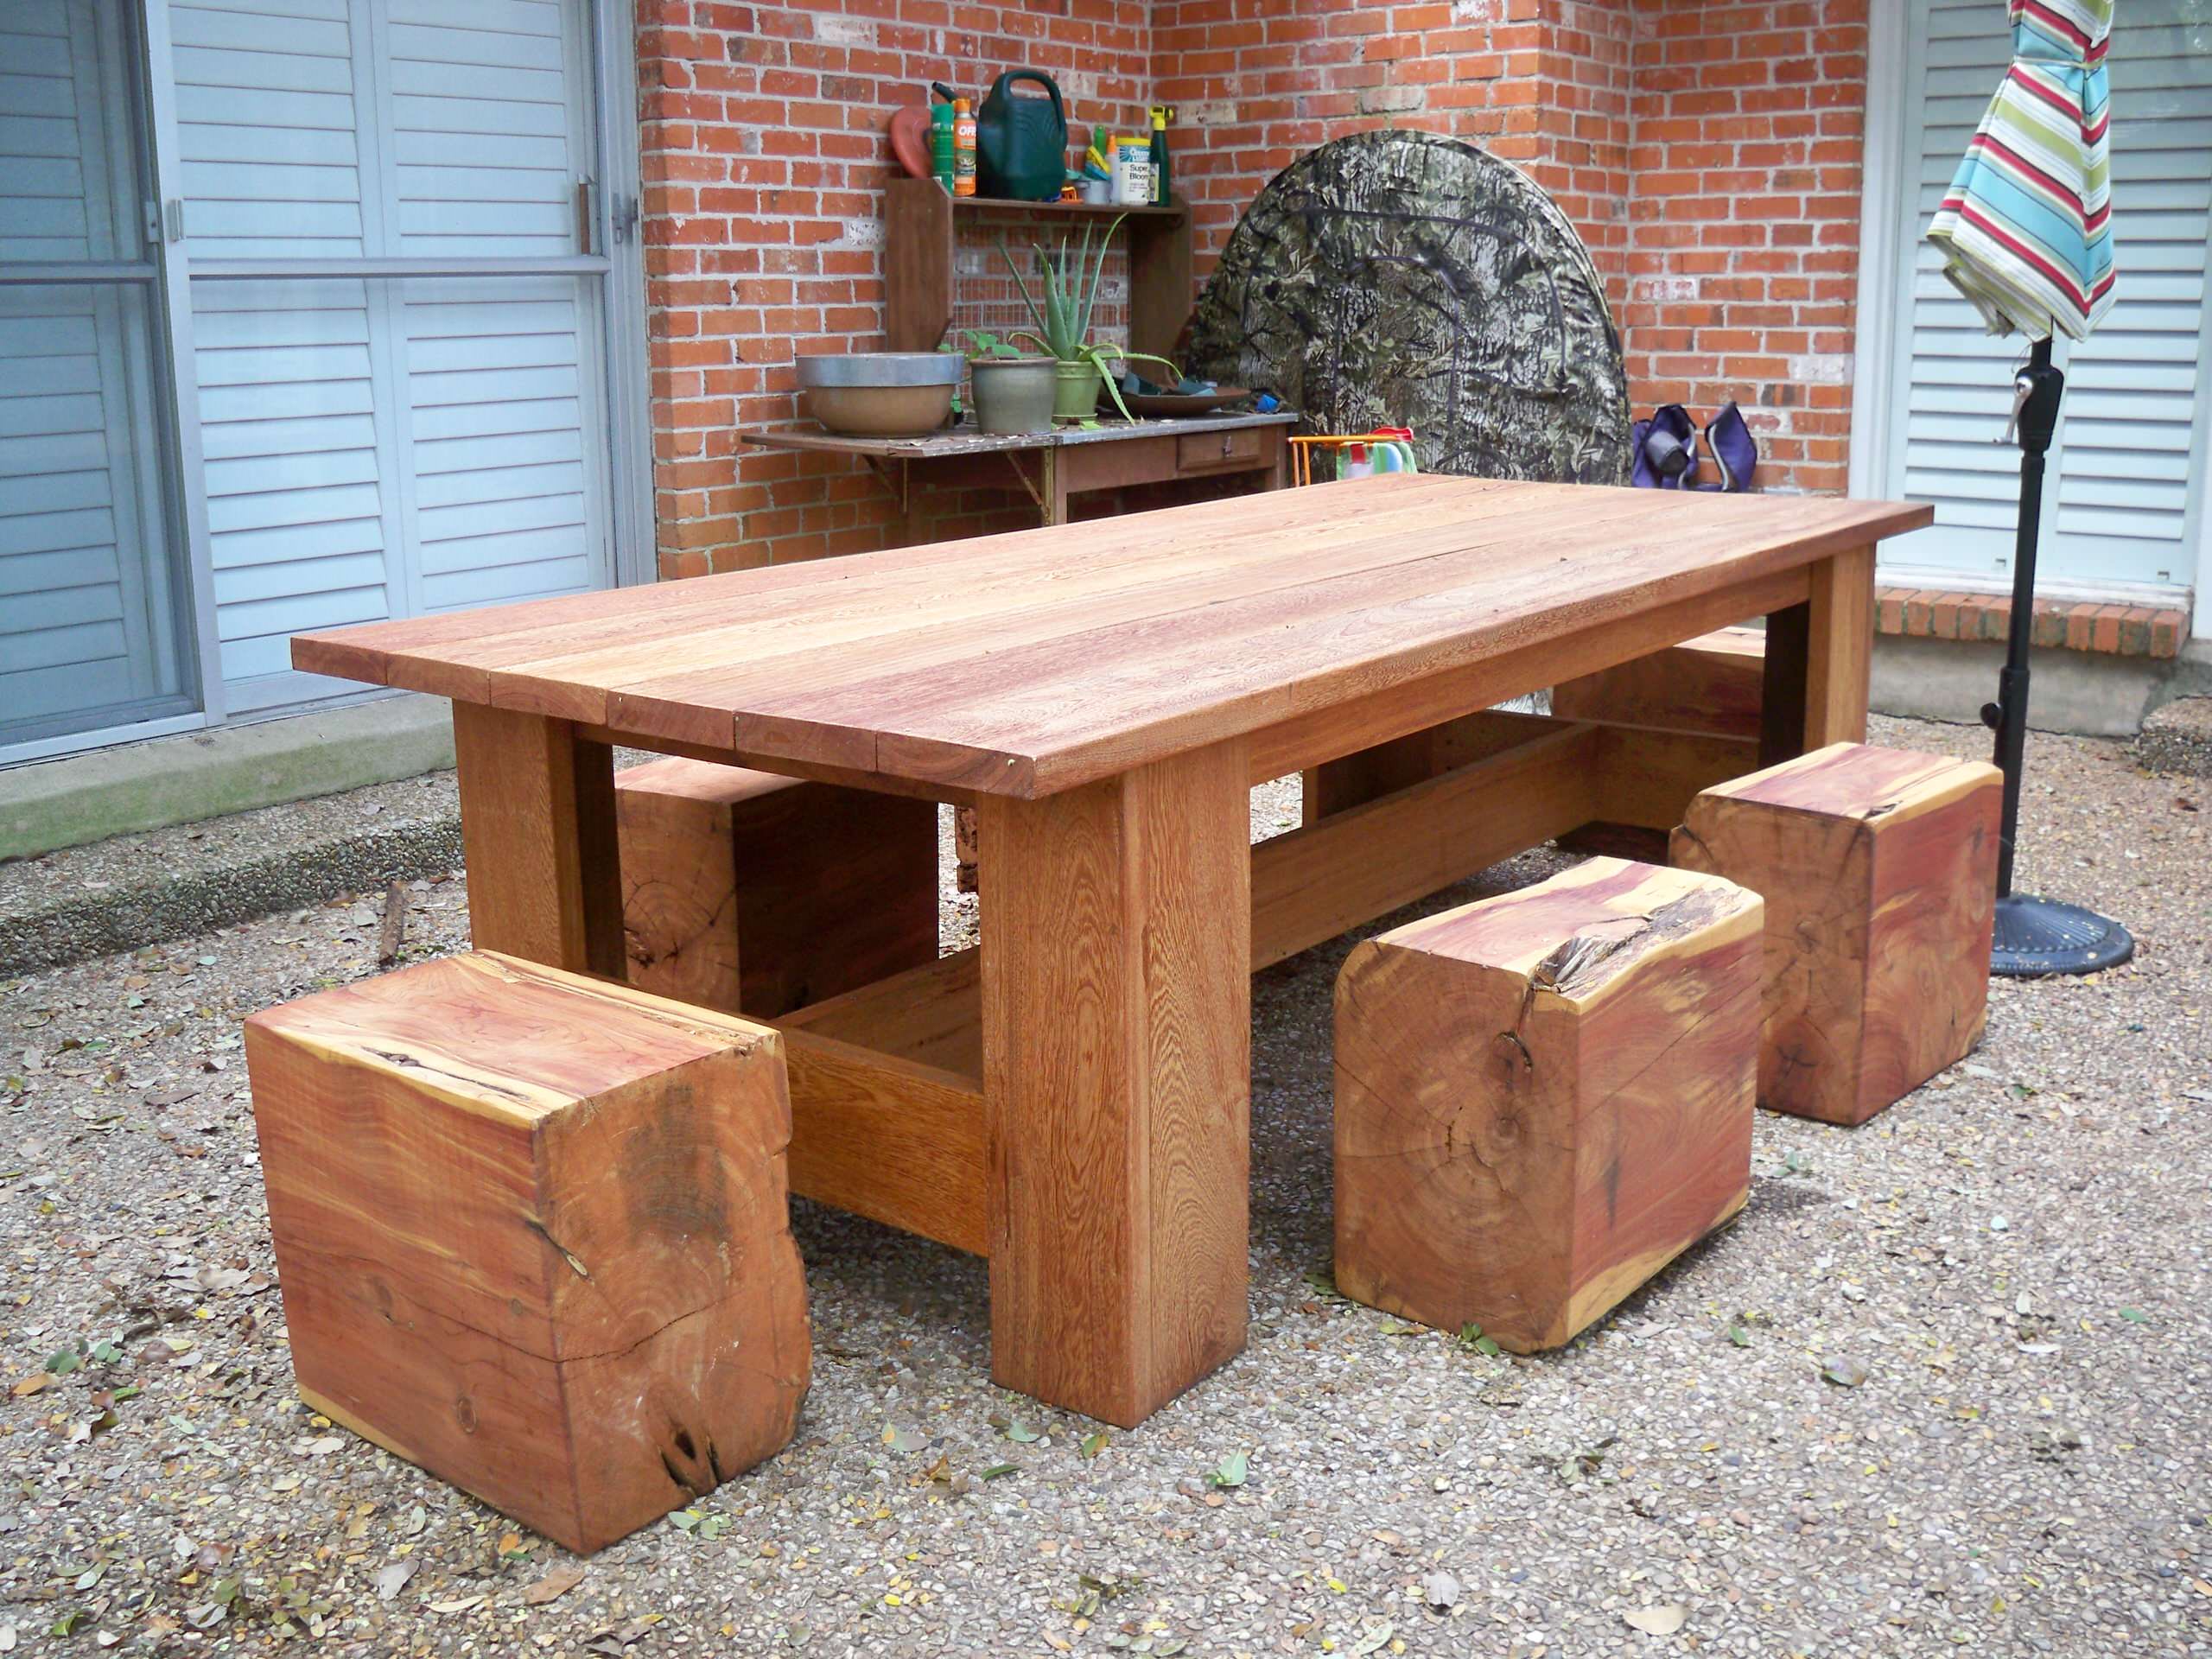 Picnic table with cedar log stools